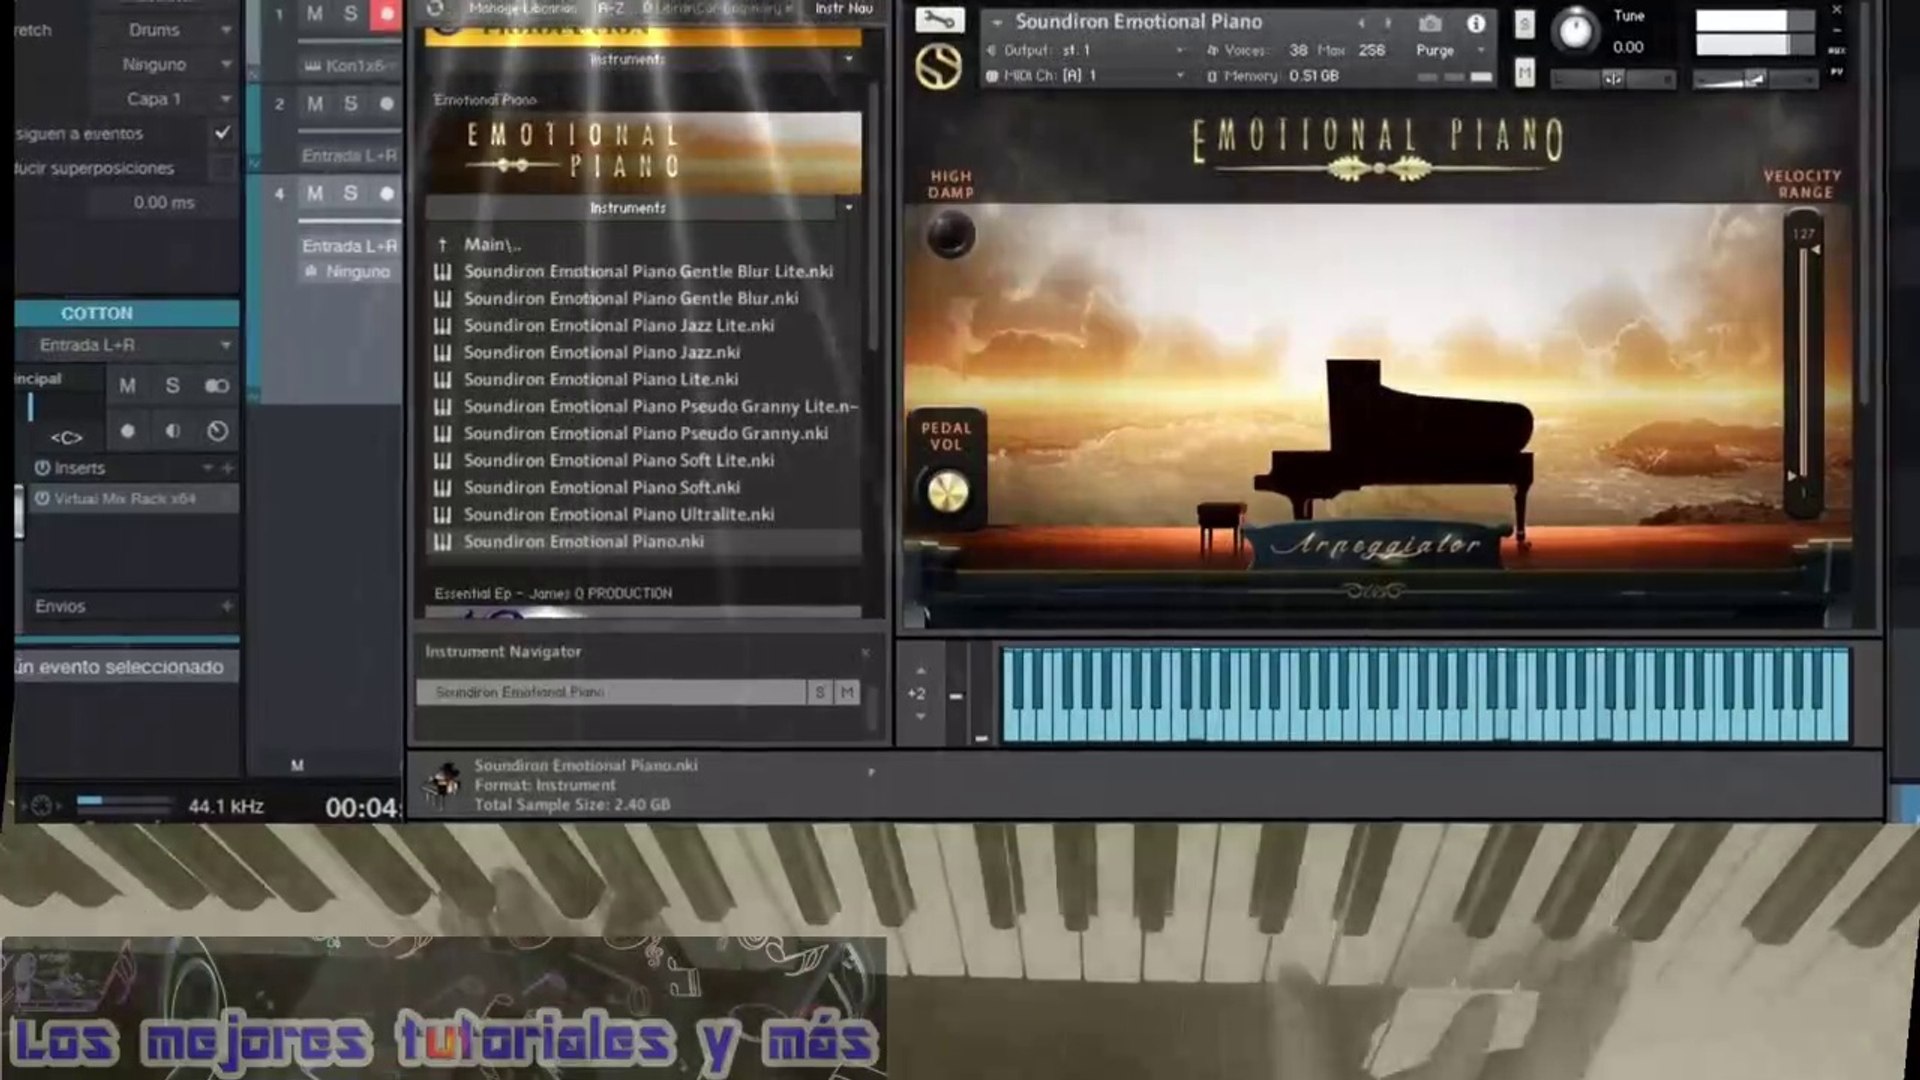 LOS MEJORES PIANOS PARA KONTAKT #6 EMOTIONAL PIANO Soundiron TUTORIAL -  Vídeo Dailymotion